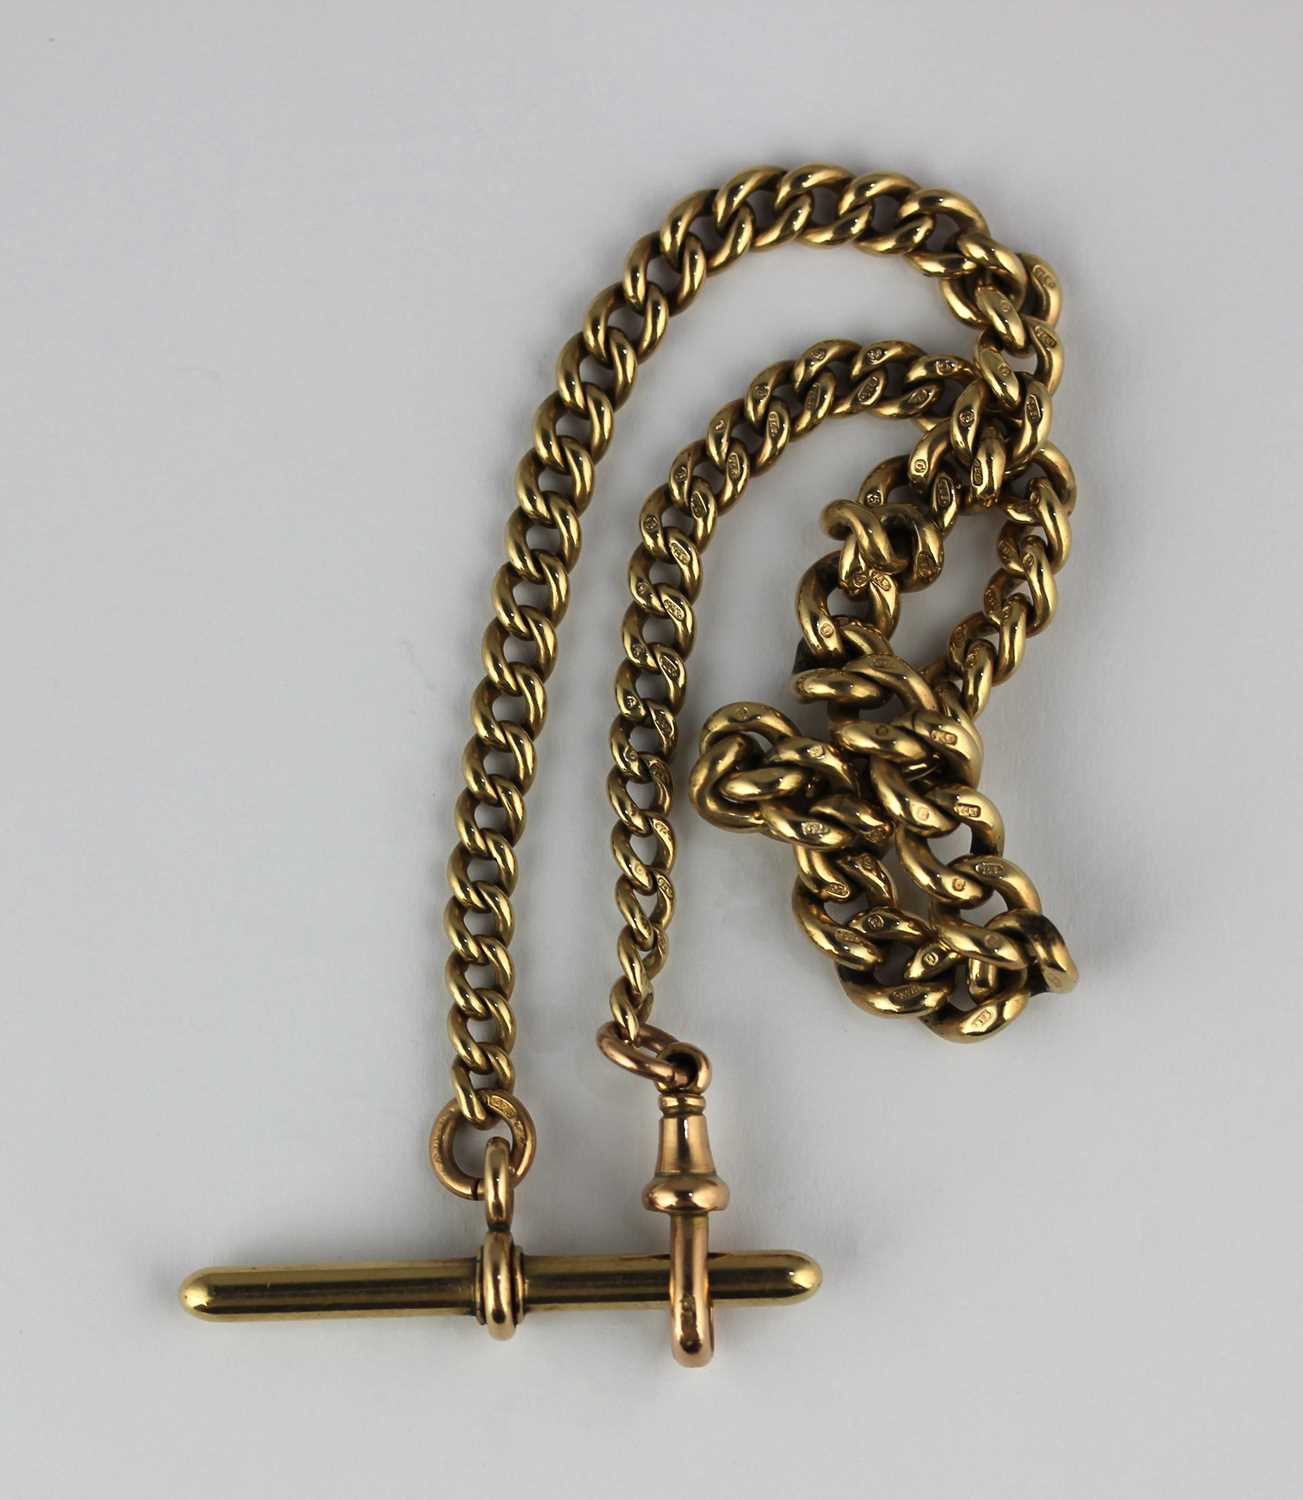 A 9ct gold graduated curb link watch Albert chain fitted with a 9ct gold T bar and with a 9ct gold